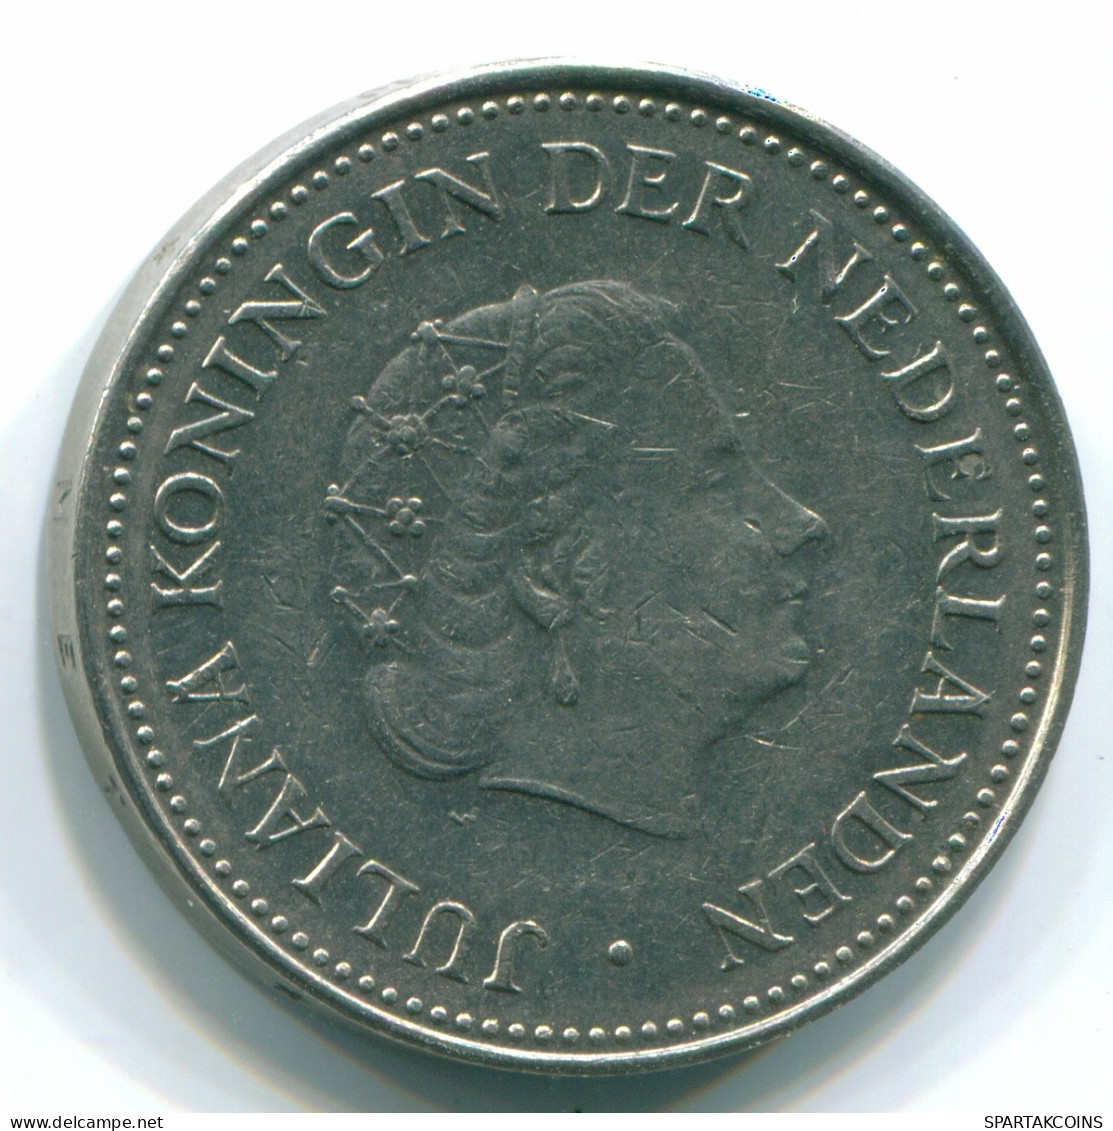 1 GULDEN 1971 NETHERLANDS ANTILLES Nickel Colonial Coin #S12012.U.A - Antille Olandesi